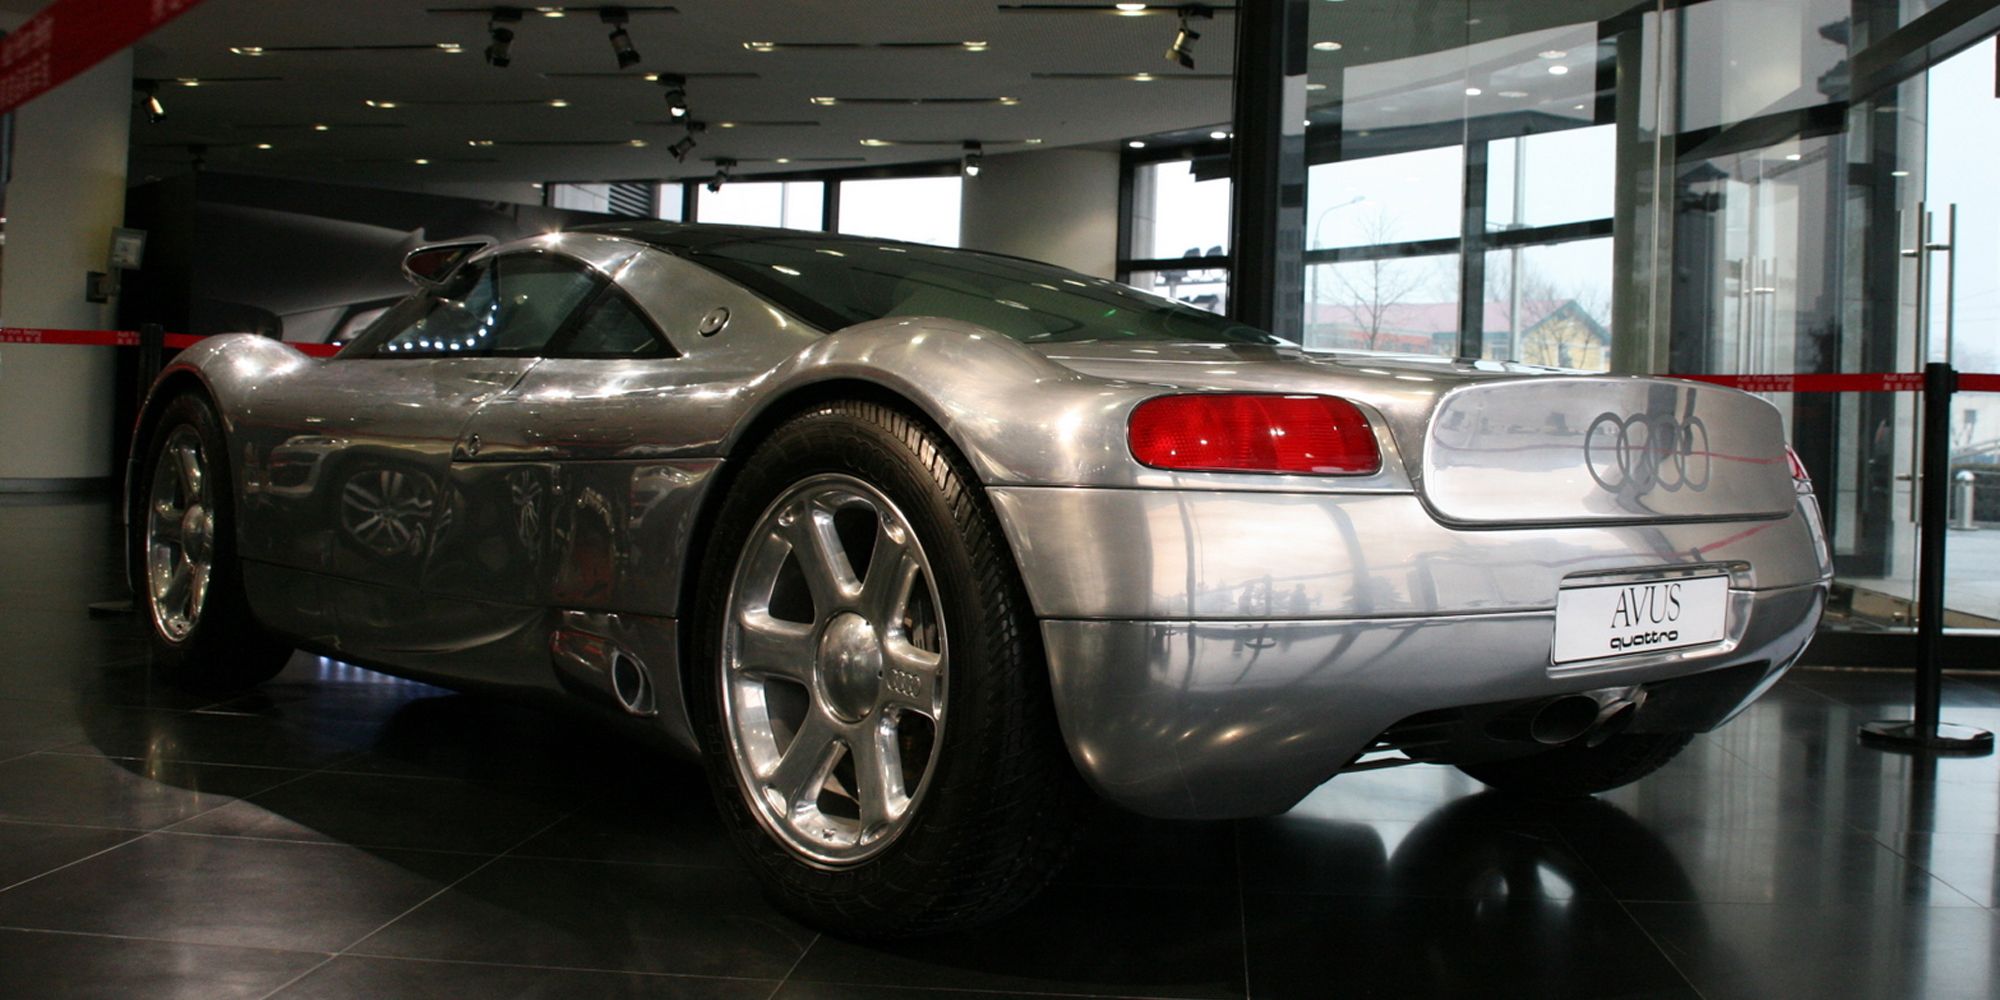 The rear of the Avus Quattro